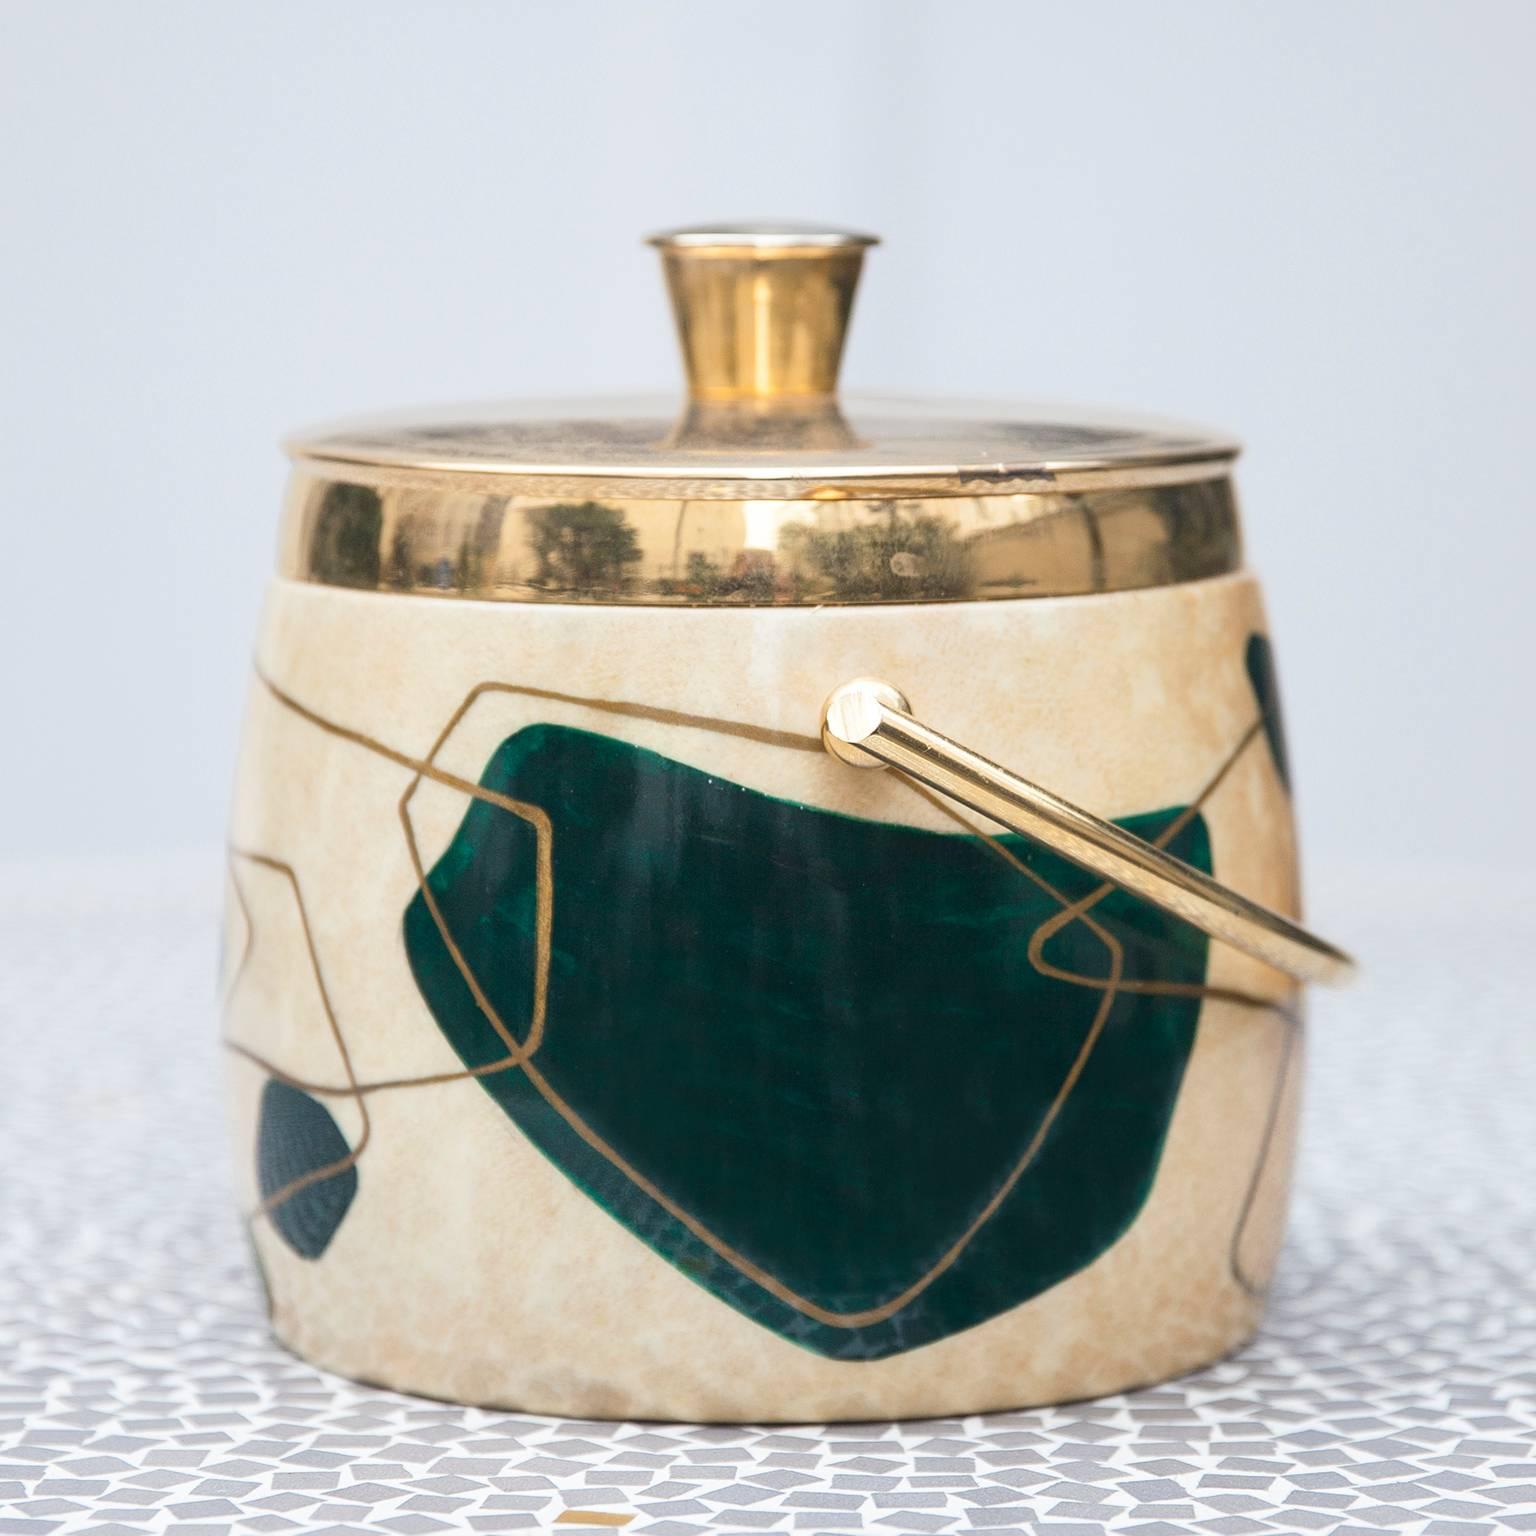 Wonderful ice bucket with geometrical motif and brass inlay, made by Aldo Tura, Milano, 1960s.